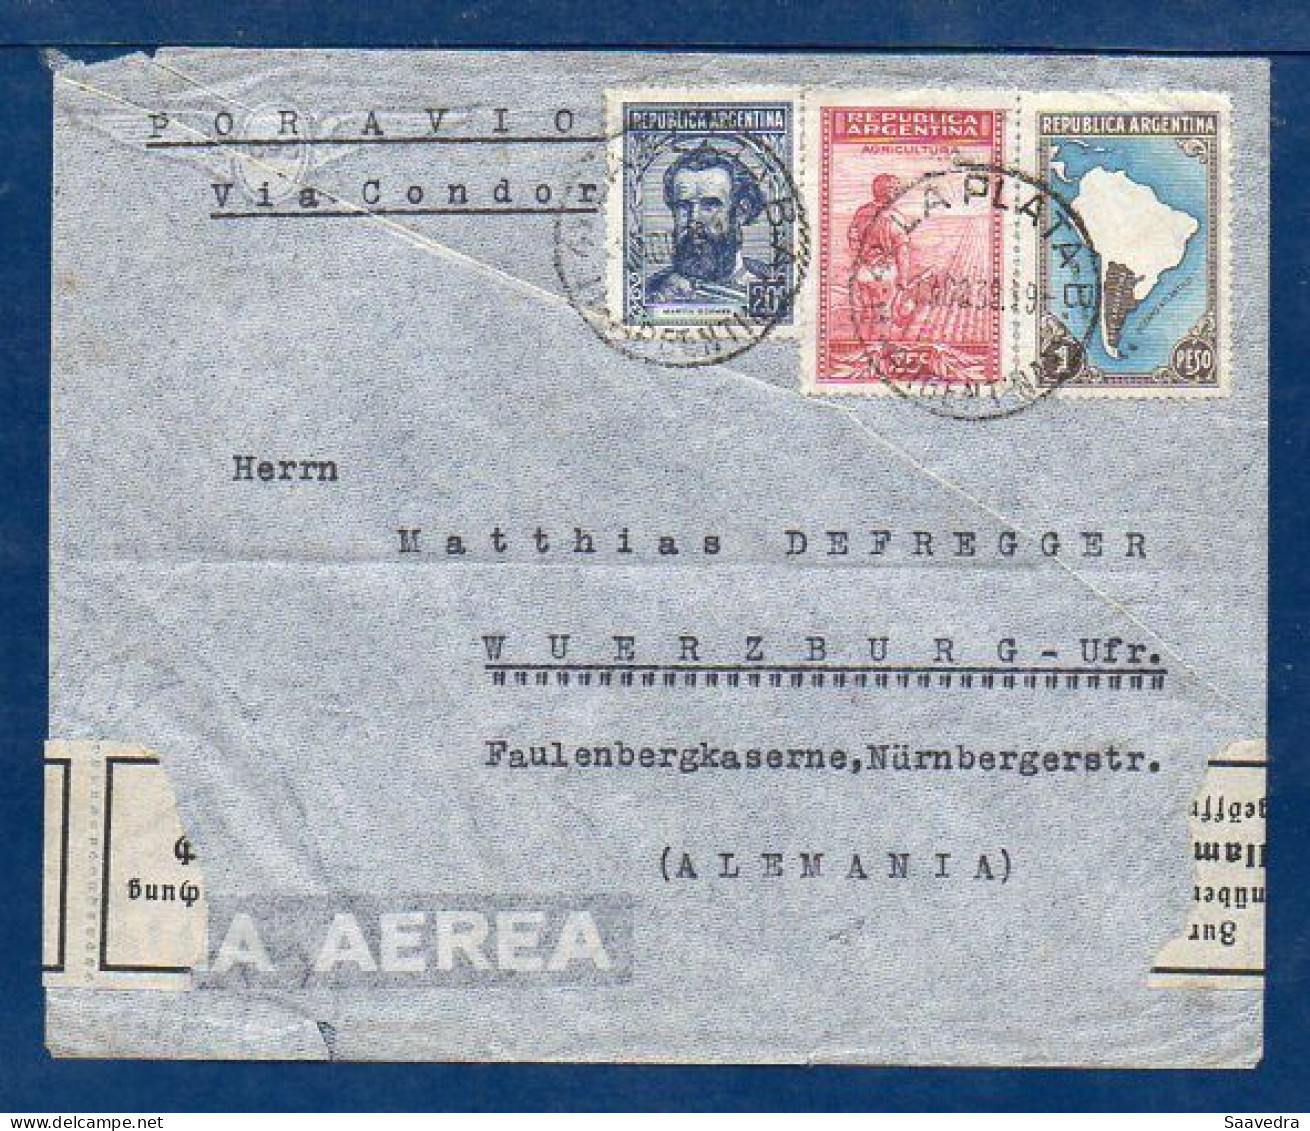 Argentina To Germany, 1939, Last Flight To Europe Via Condor, Flight L-480, Currency Censor Tape, SEE DESCRIPTION  (040) - Briefe U. Dokumente